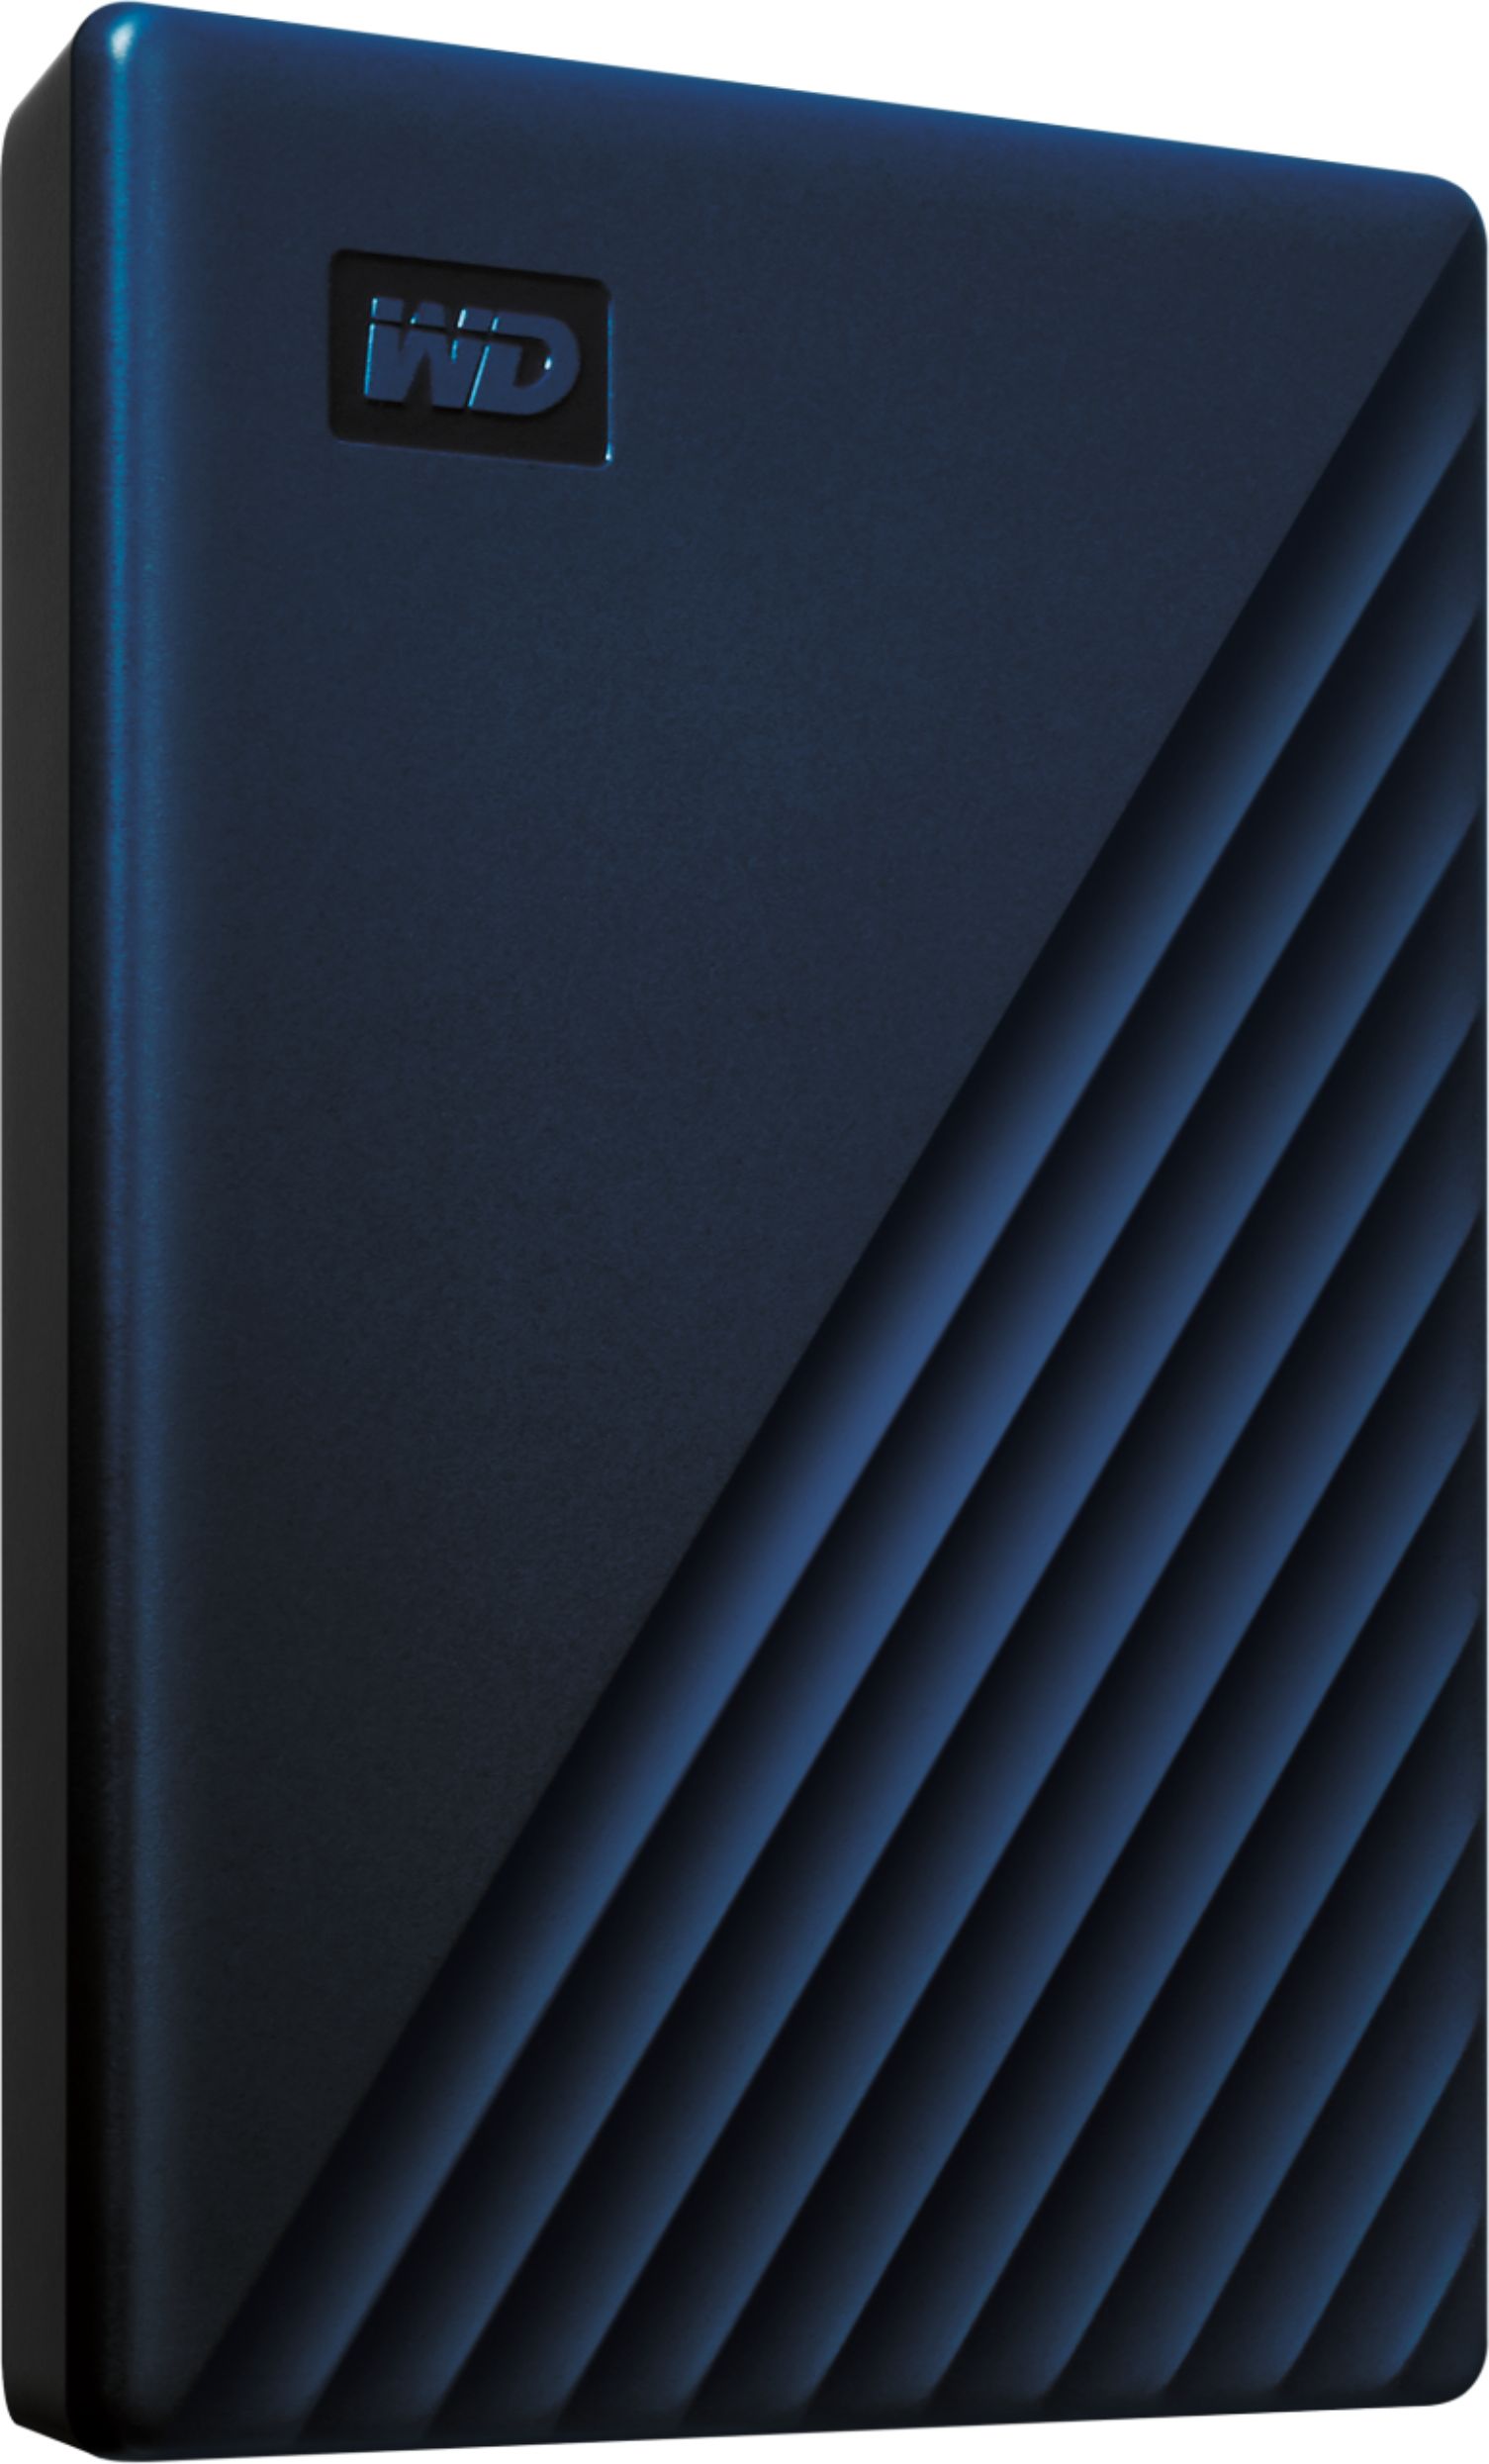 2TB External Hard Drive Portable Hard Drive External Type-C//USB 2.0 HDD for Mac Laptop PC 2tb, Blue